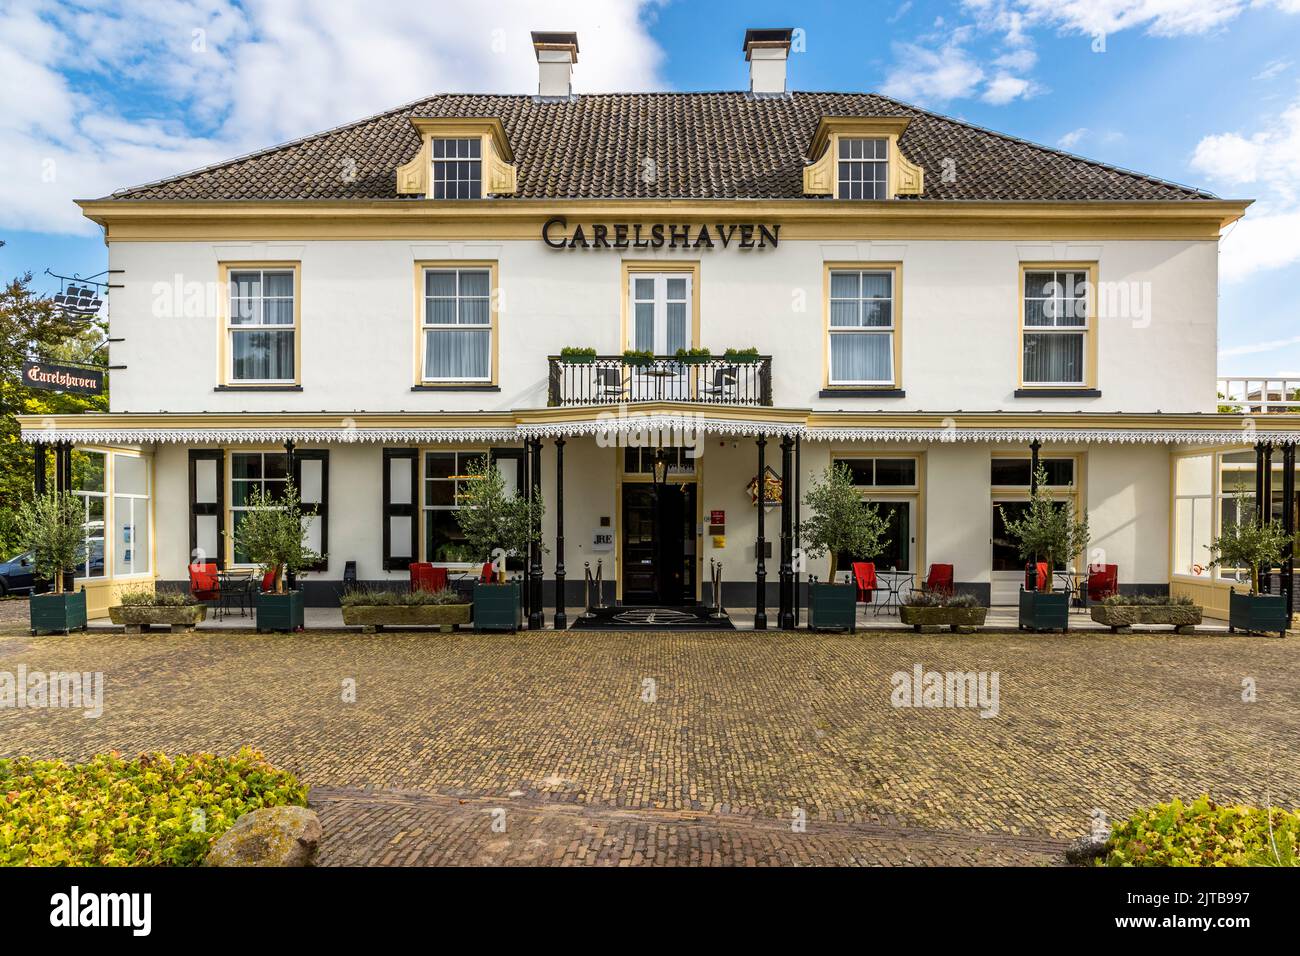 Hotel Carelshaven named after Graaf Carel George van Wassenaer Obdam. Hotel and restaurant Carelshaven in Delden exists since 1772 in Hof van Twente, Netherlands Stock Photo